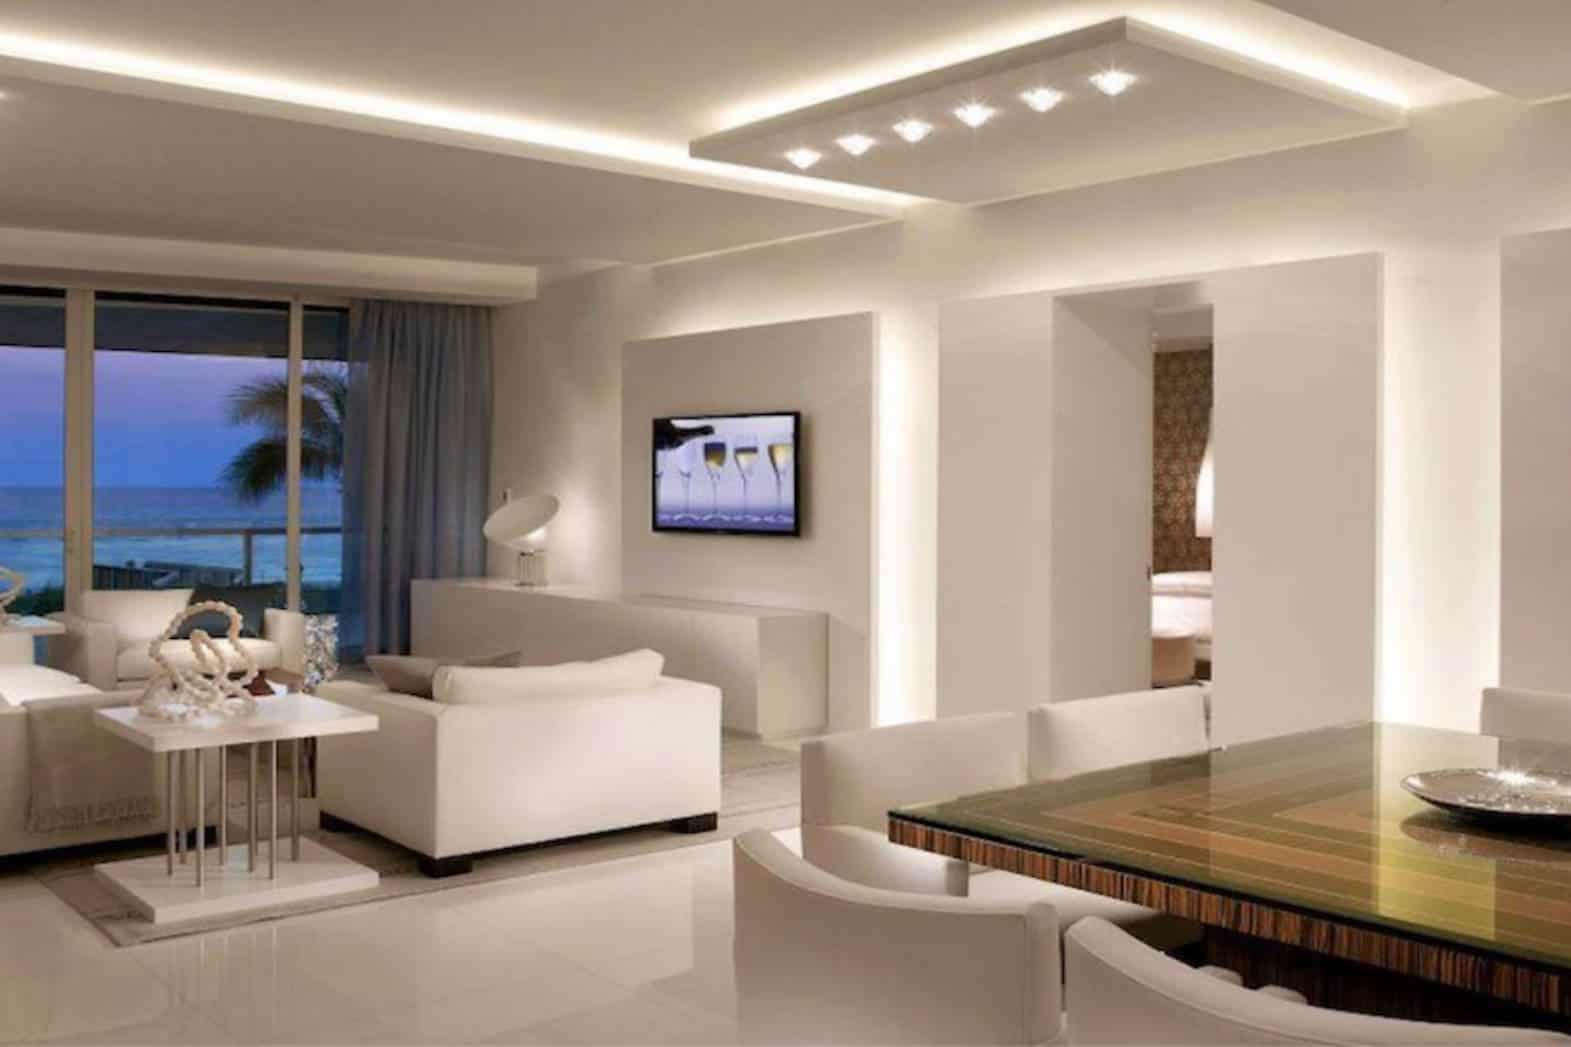 integrated led ceiling lights